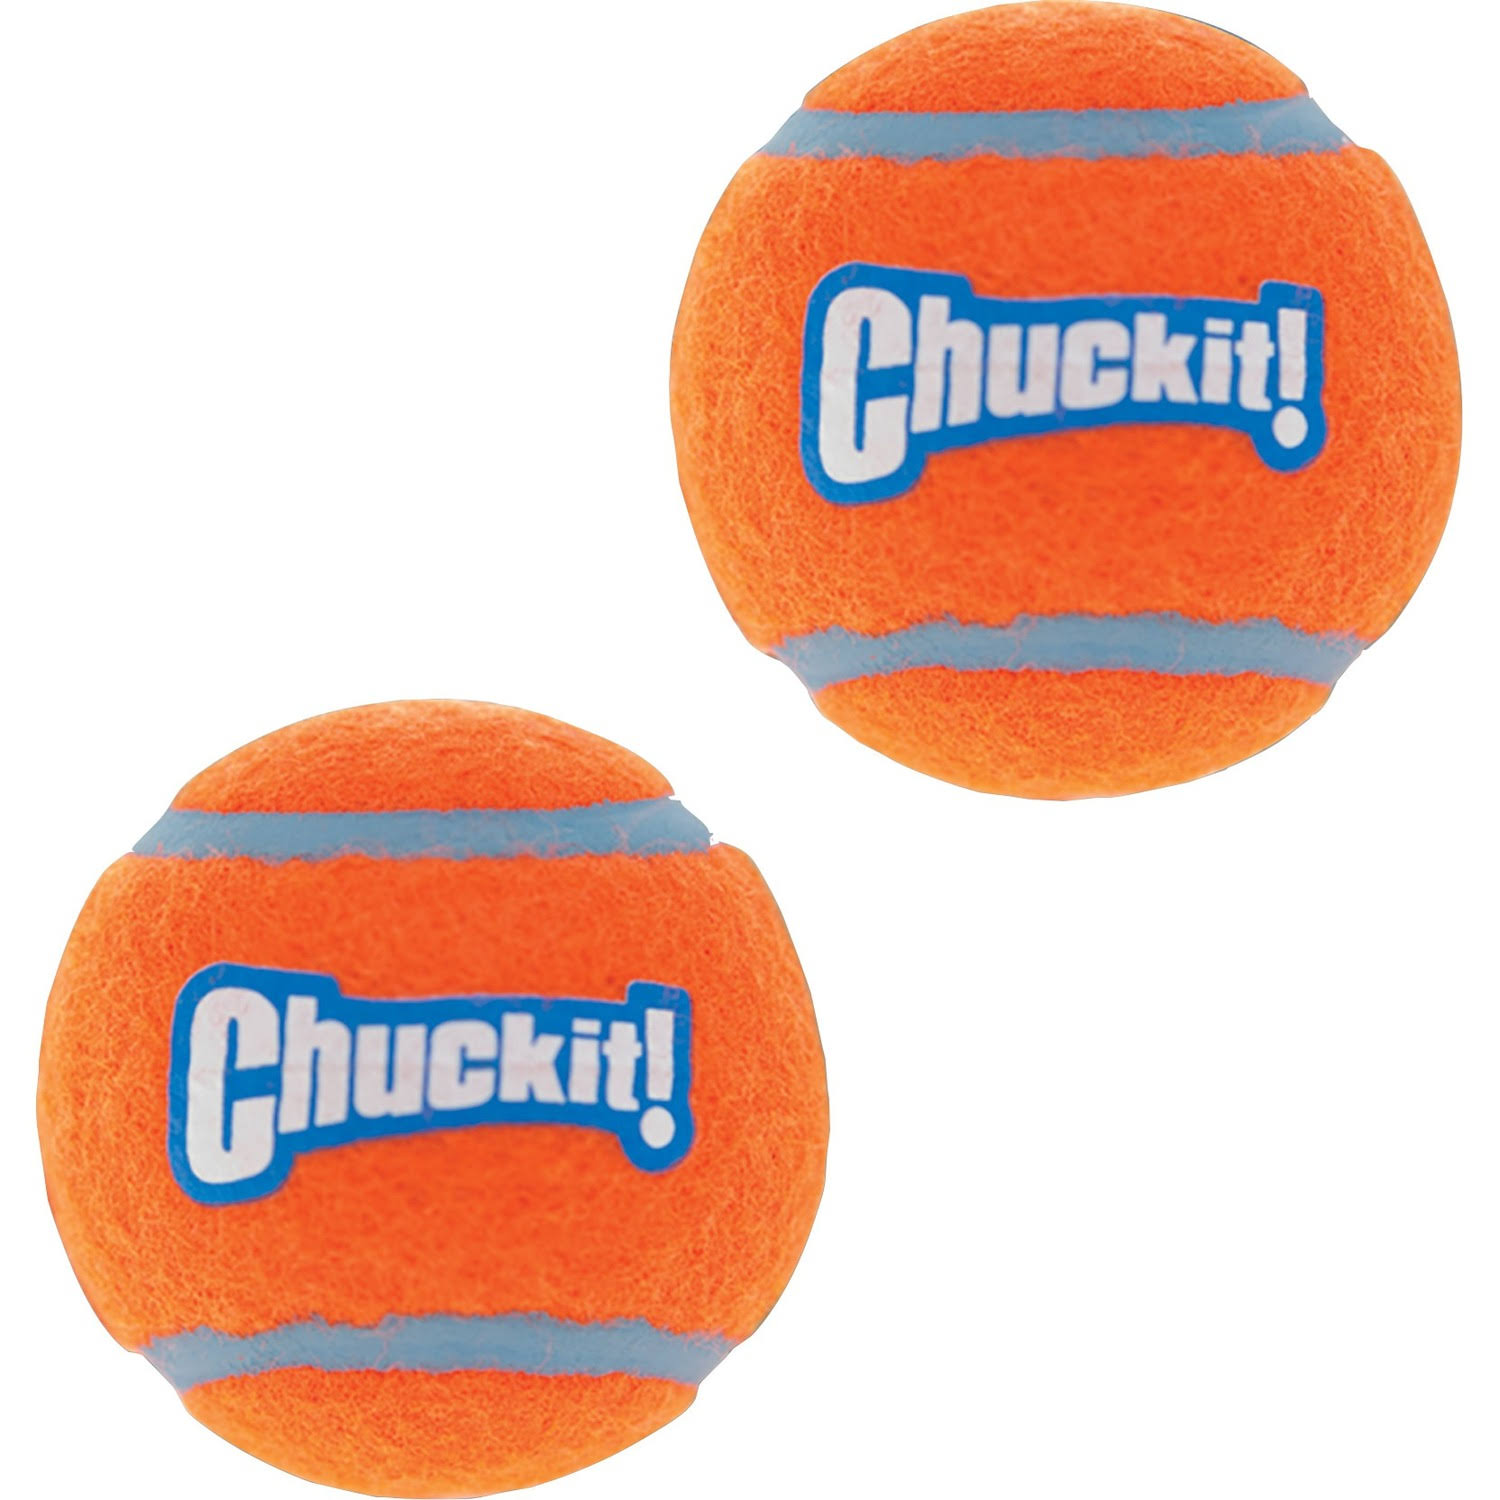 Canine Hardware Chuckit Tennis Ball Pet Toy - 2pk